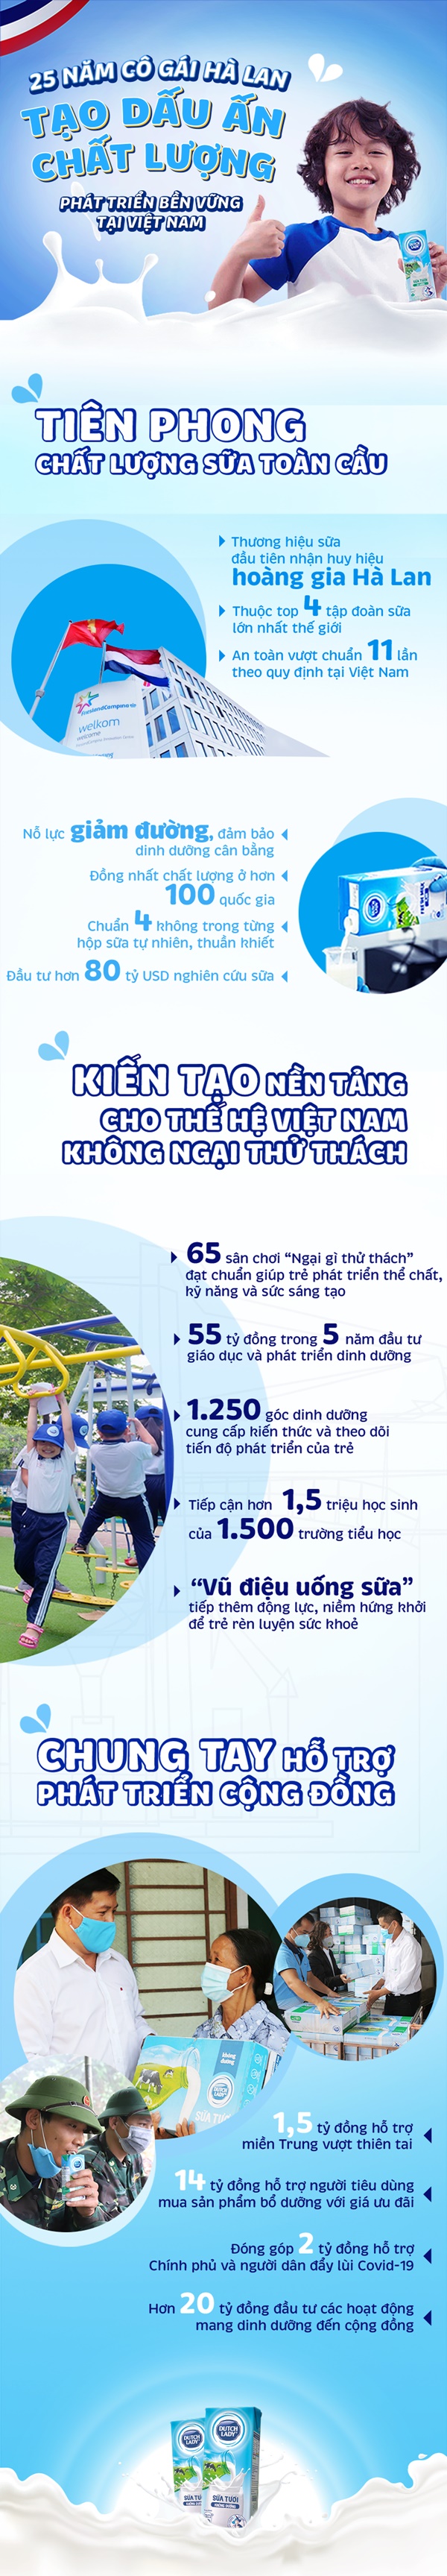 21Apr2021_25 nam CGHL tai Vietnam_Infographic